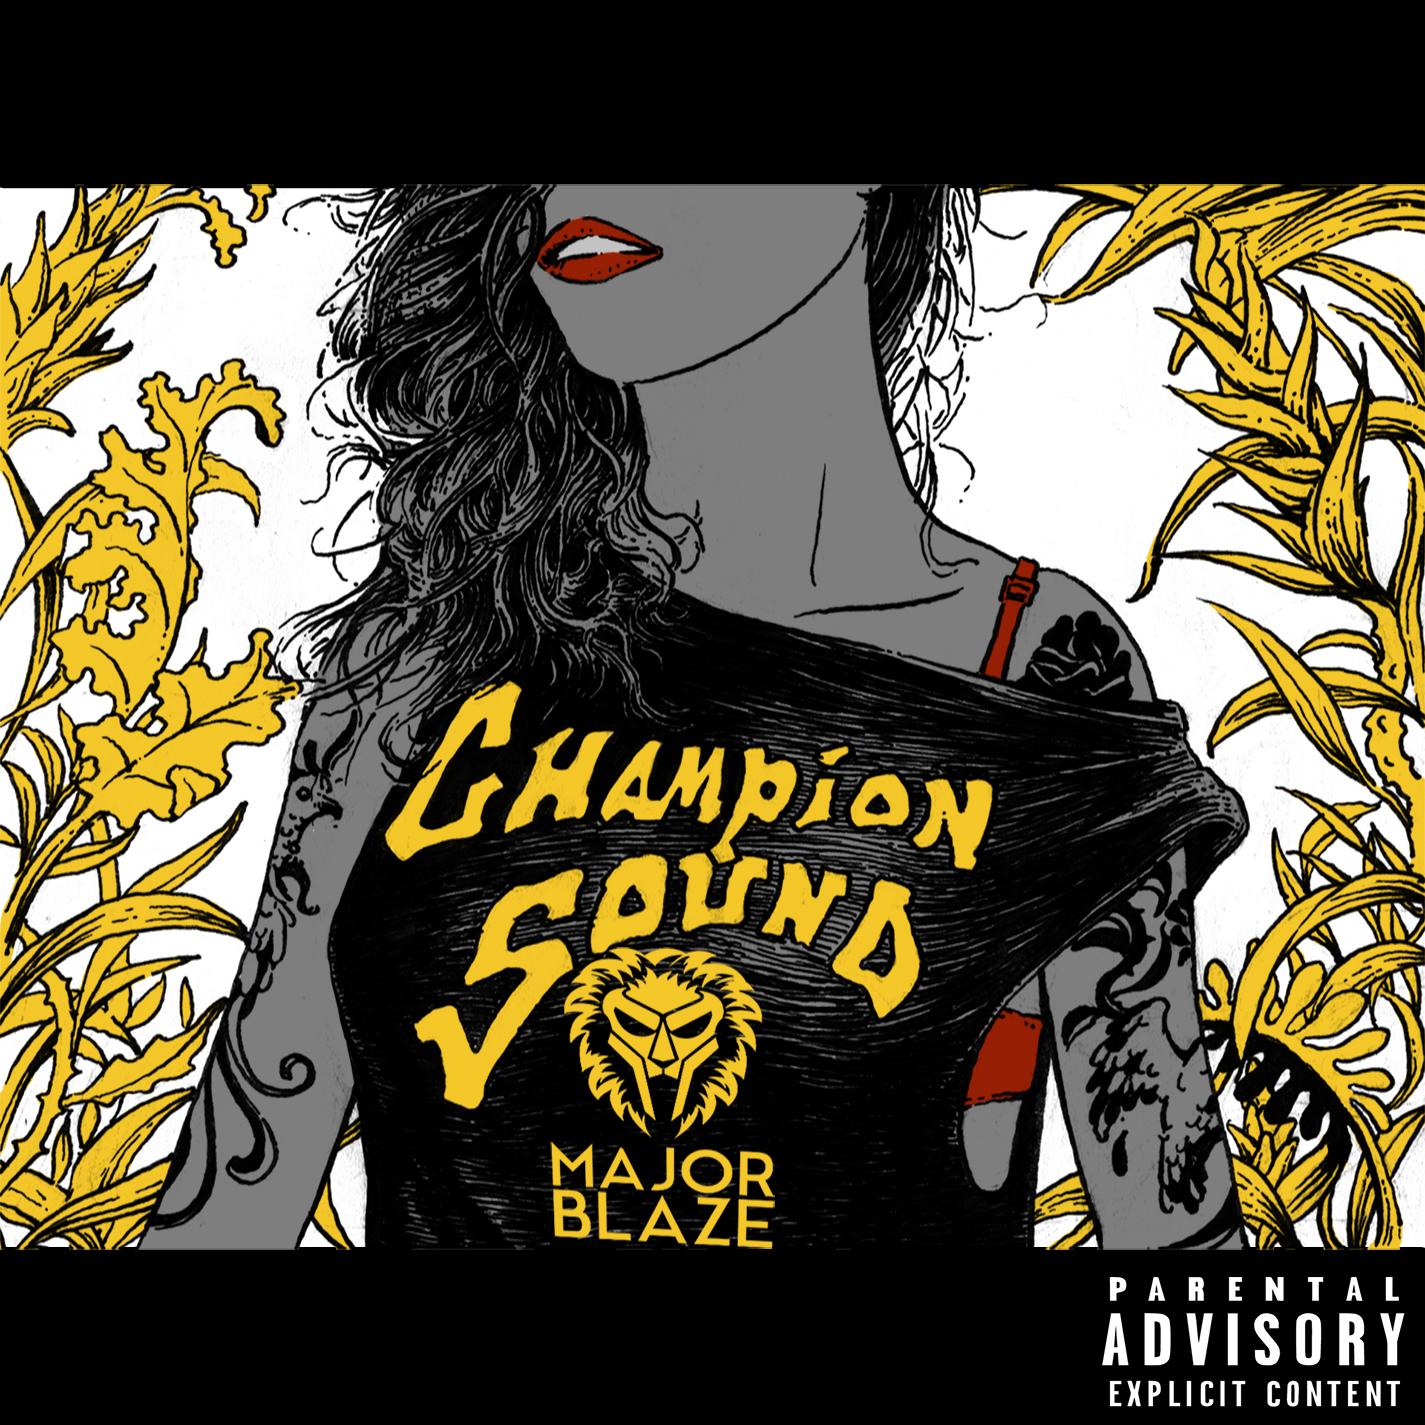  Major Blaze – Champion Sound